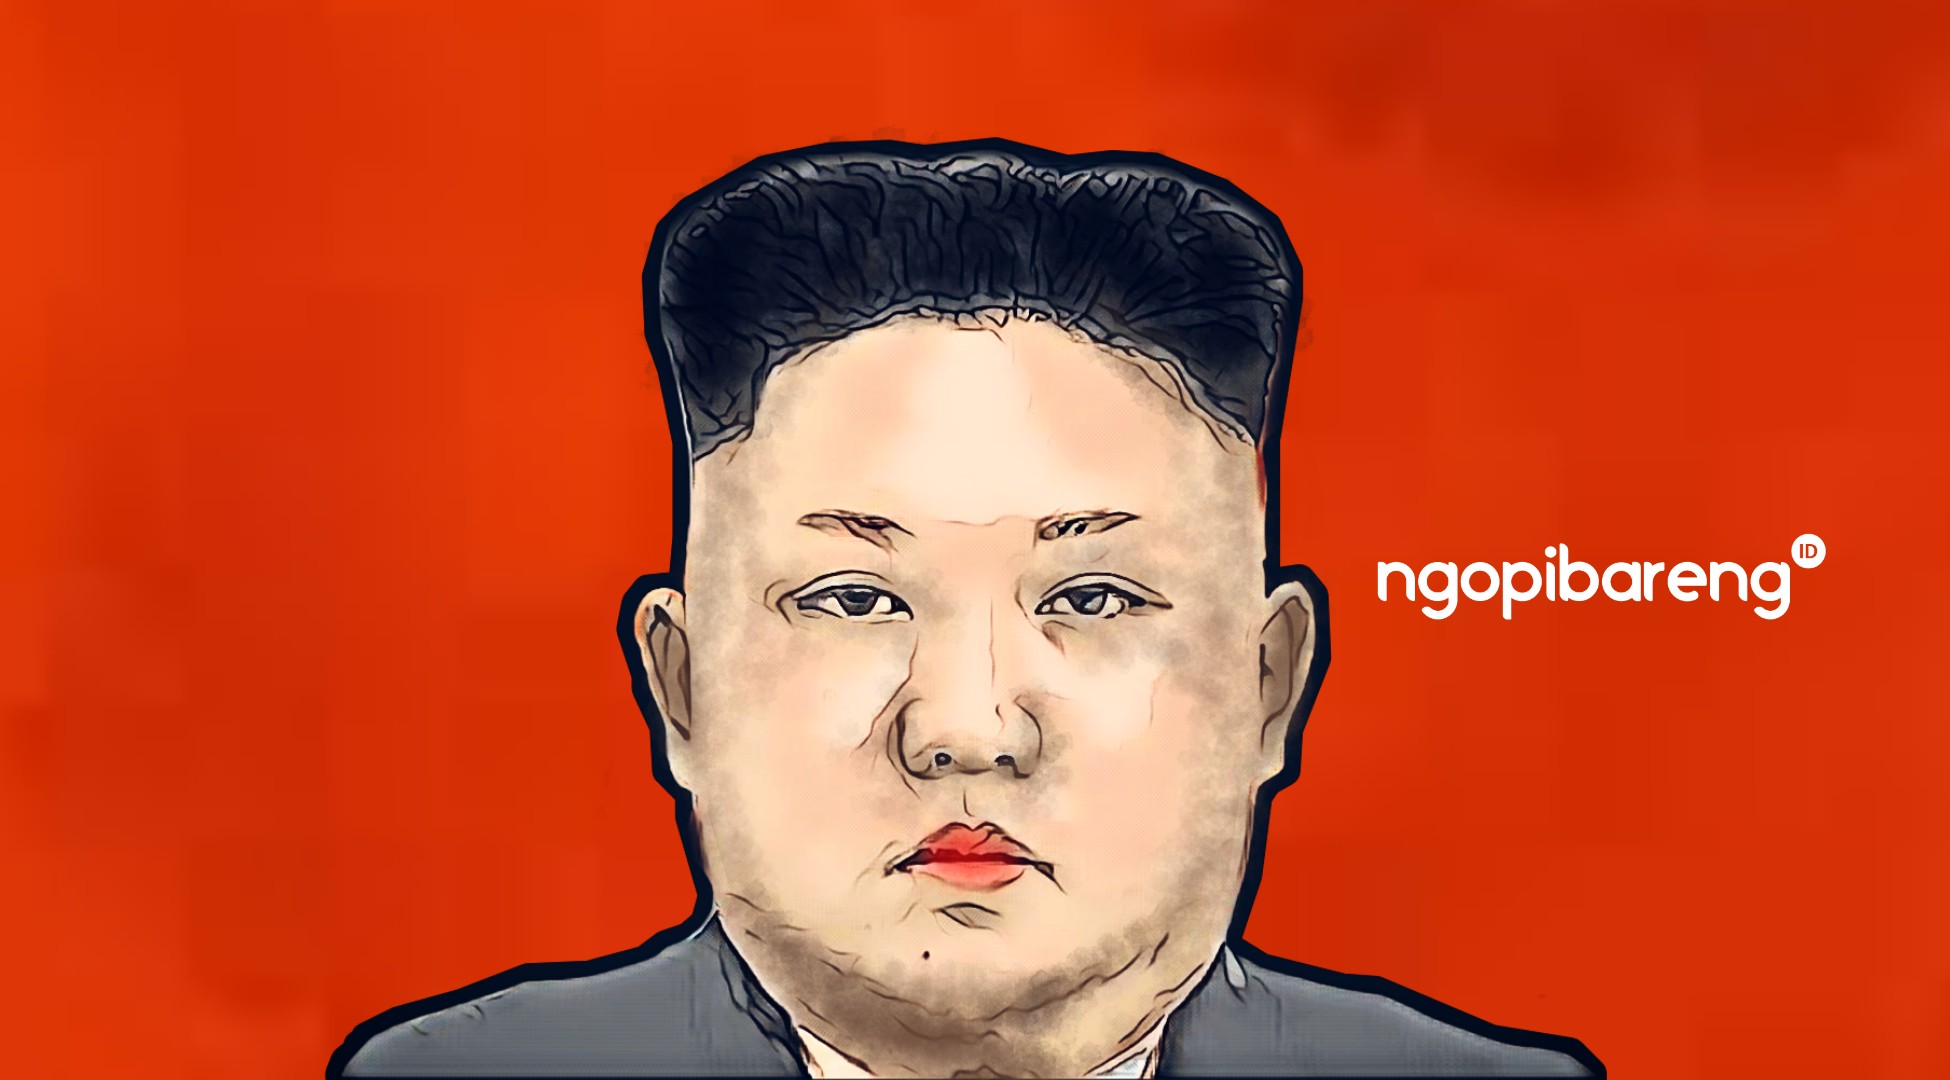 Ilustrasi pemimpin Korea Utara (Korut) Kim Jong-Un. (Grafis: Fa Vidhi/Ngopibareng.id)